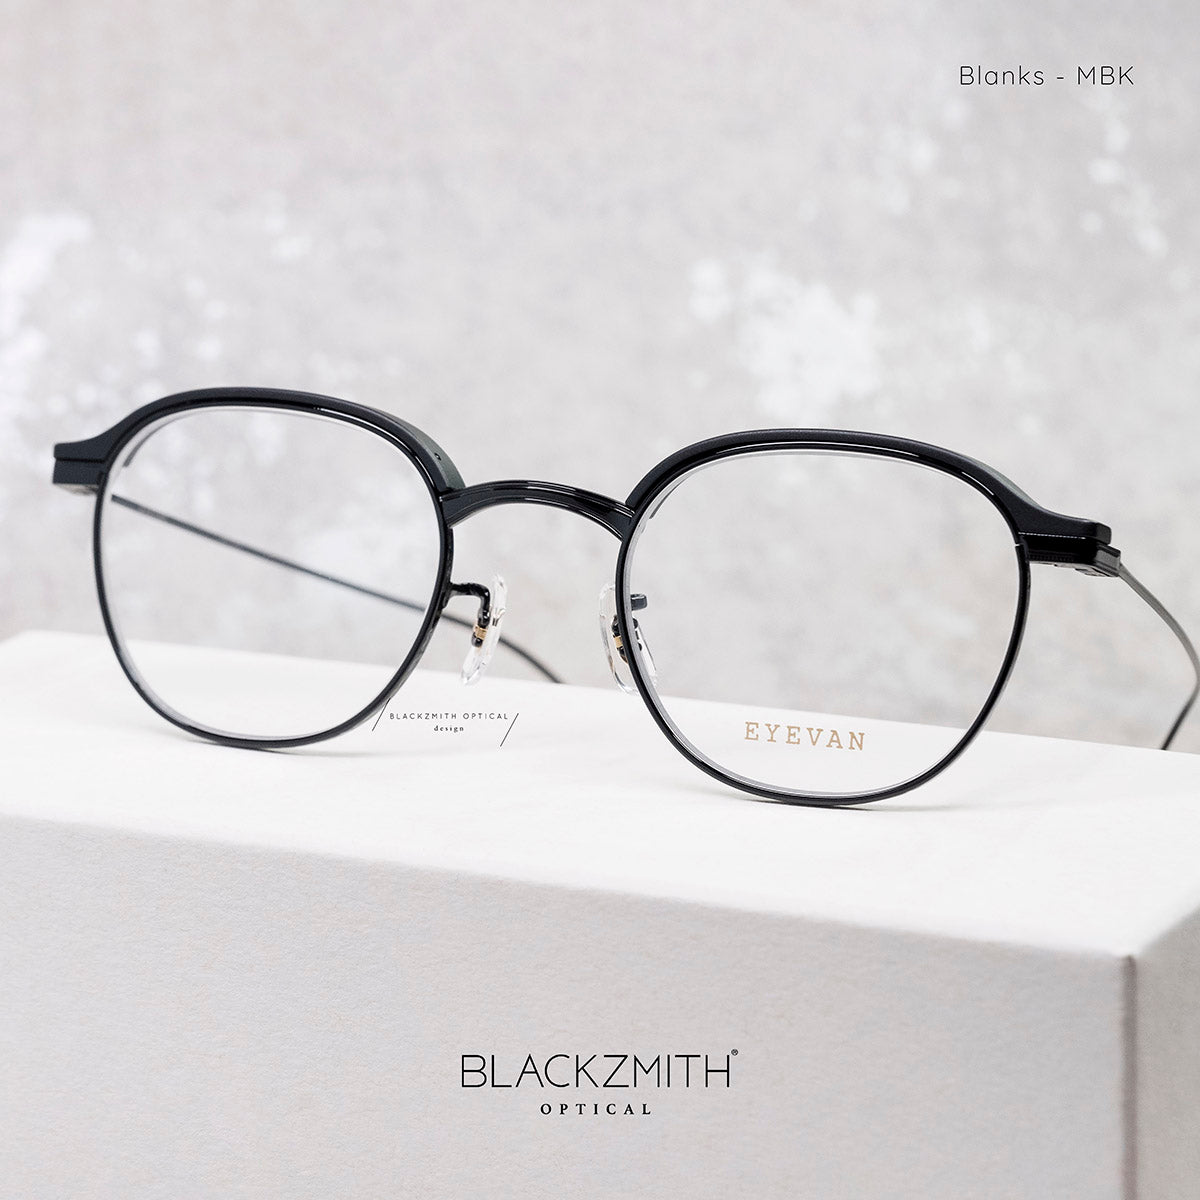 Eyevan - Blanks MBK (47)【Pre-order Now】 – BLACKZMITH Optical